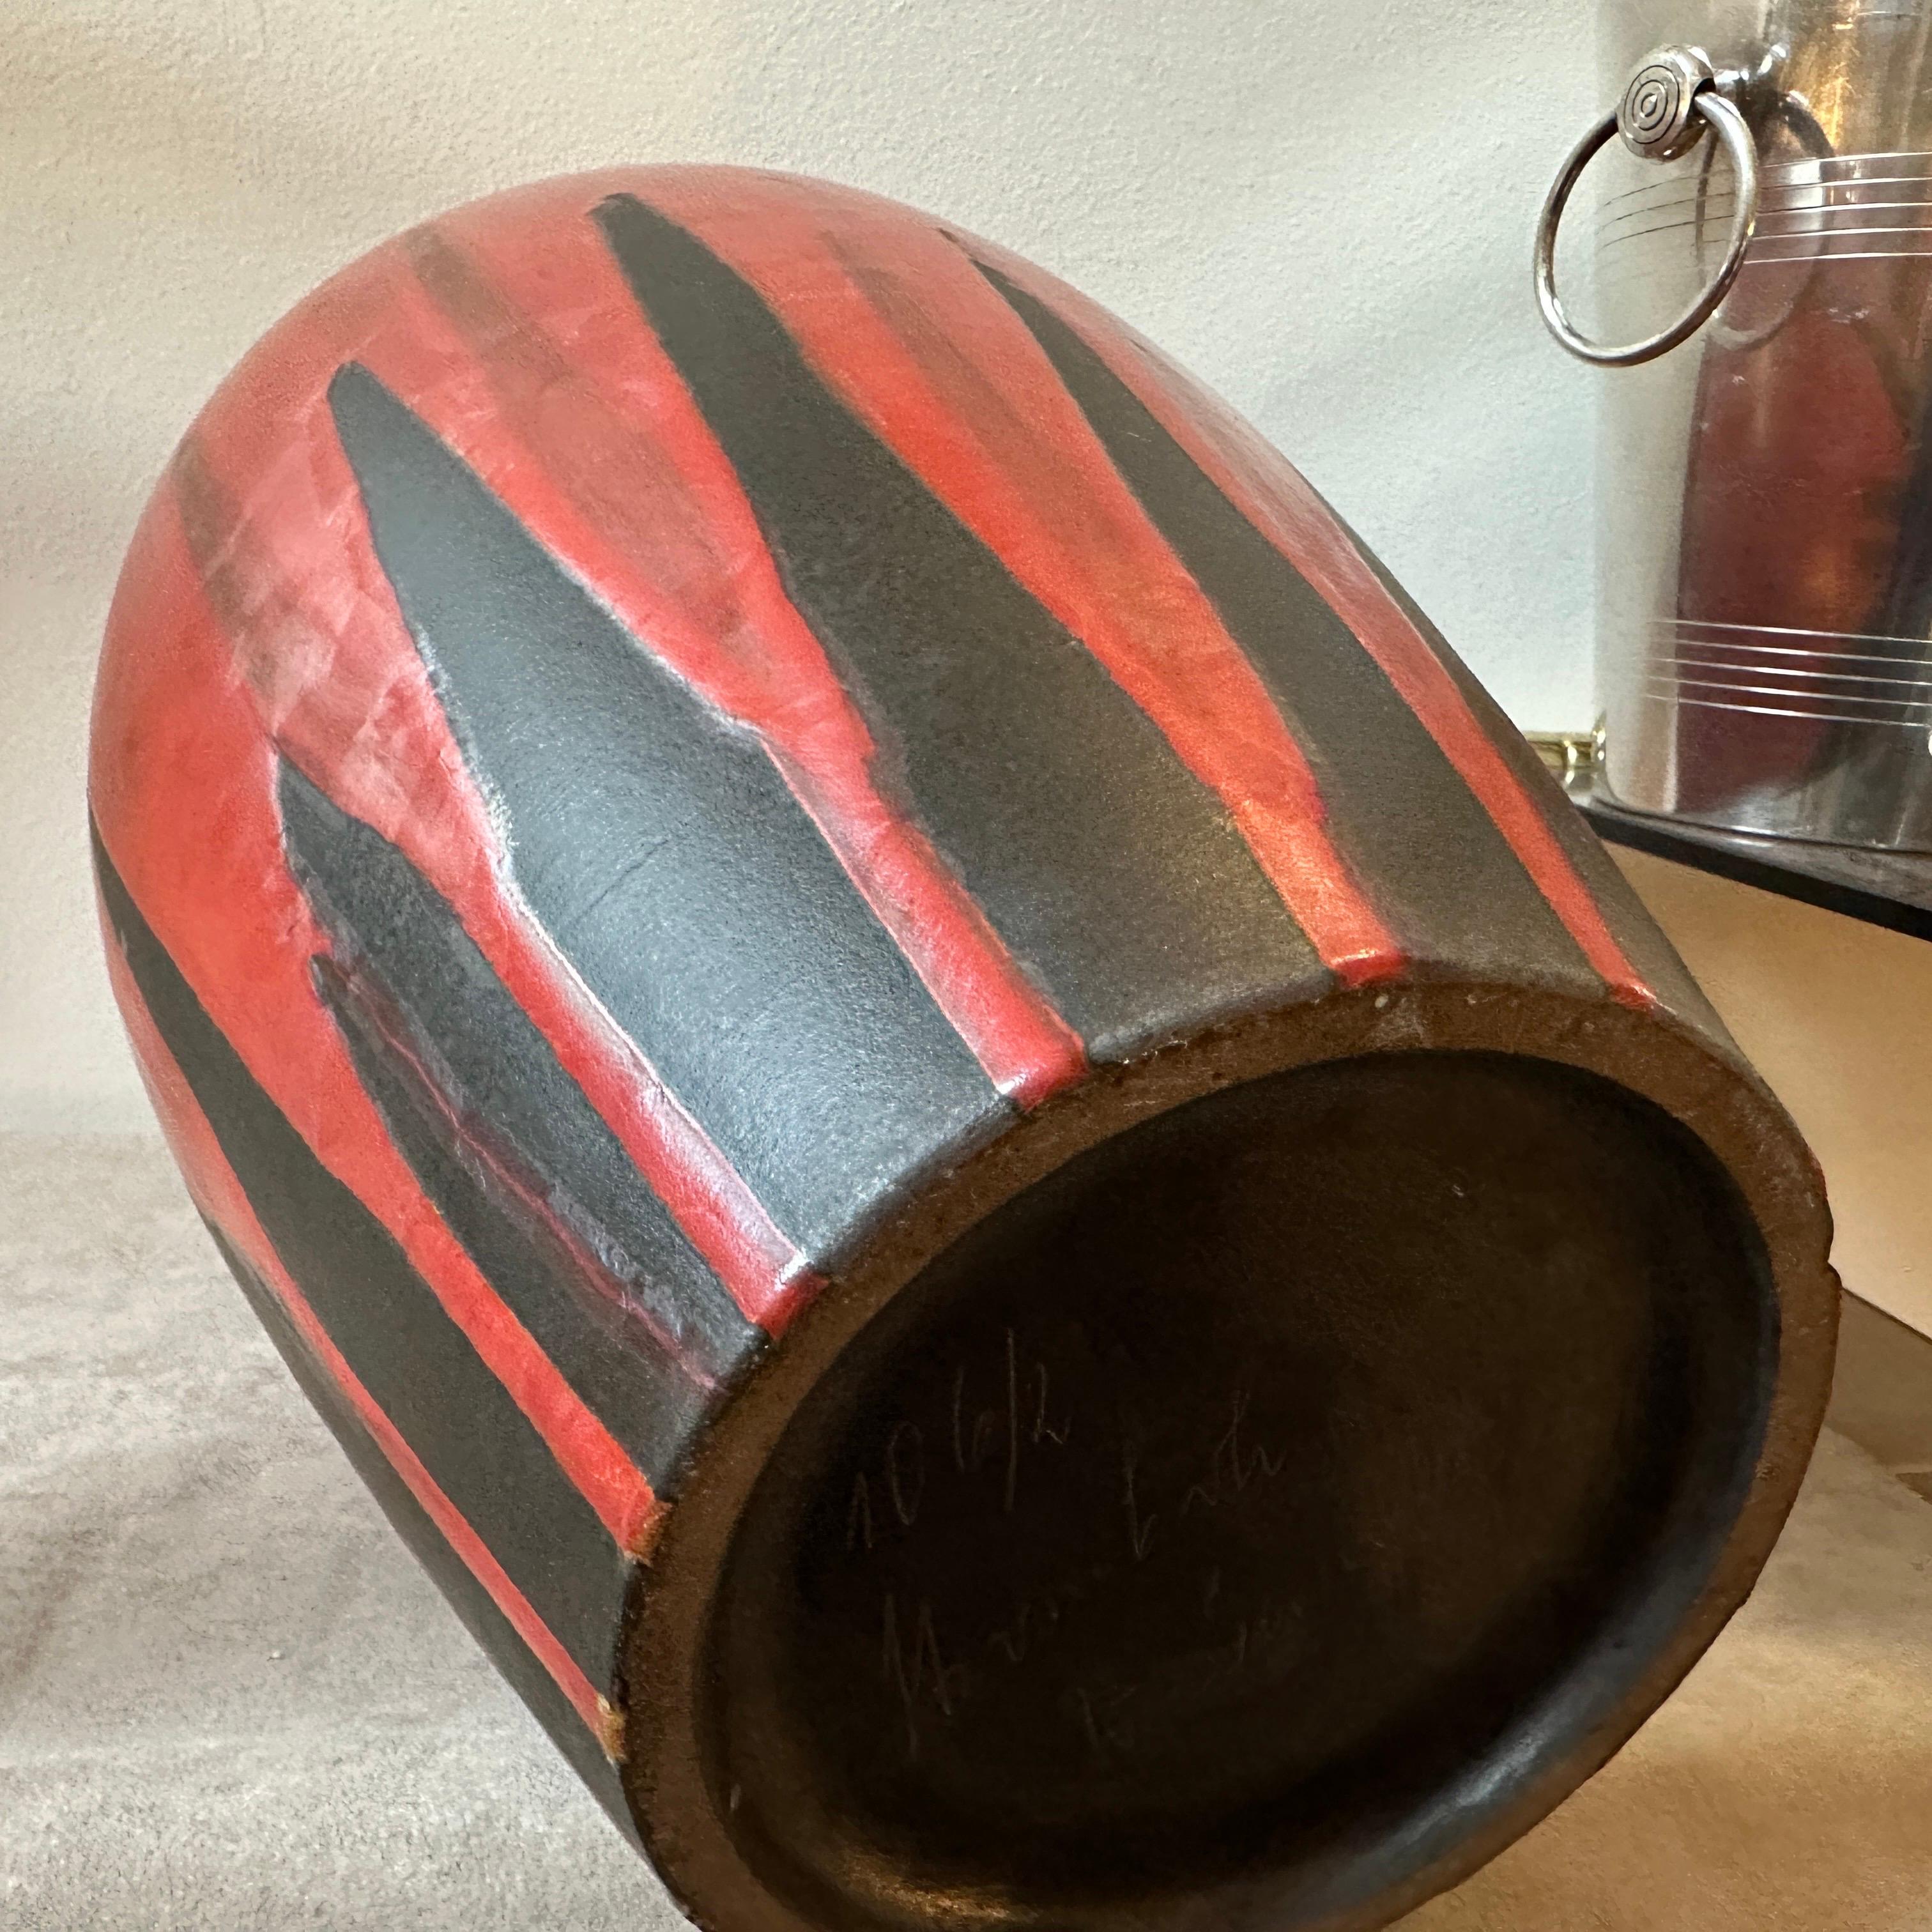 1976 Modernist Red and black Fat Lava Ceramic Stromboli Big Vase by Ceramano For Sale 2